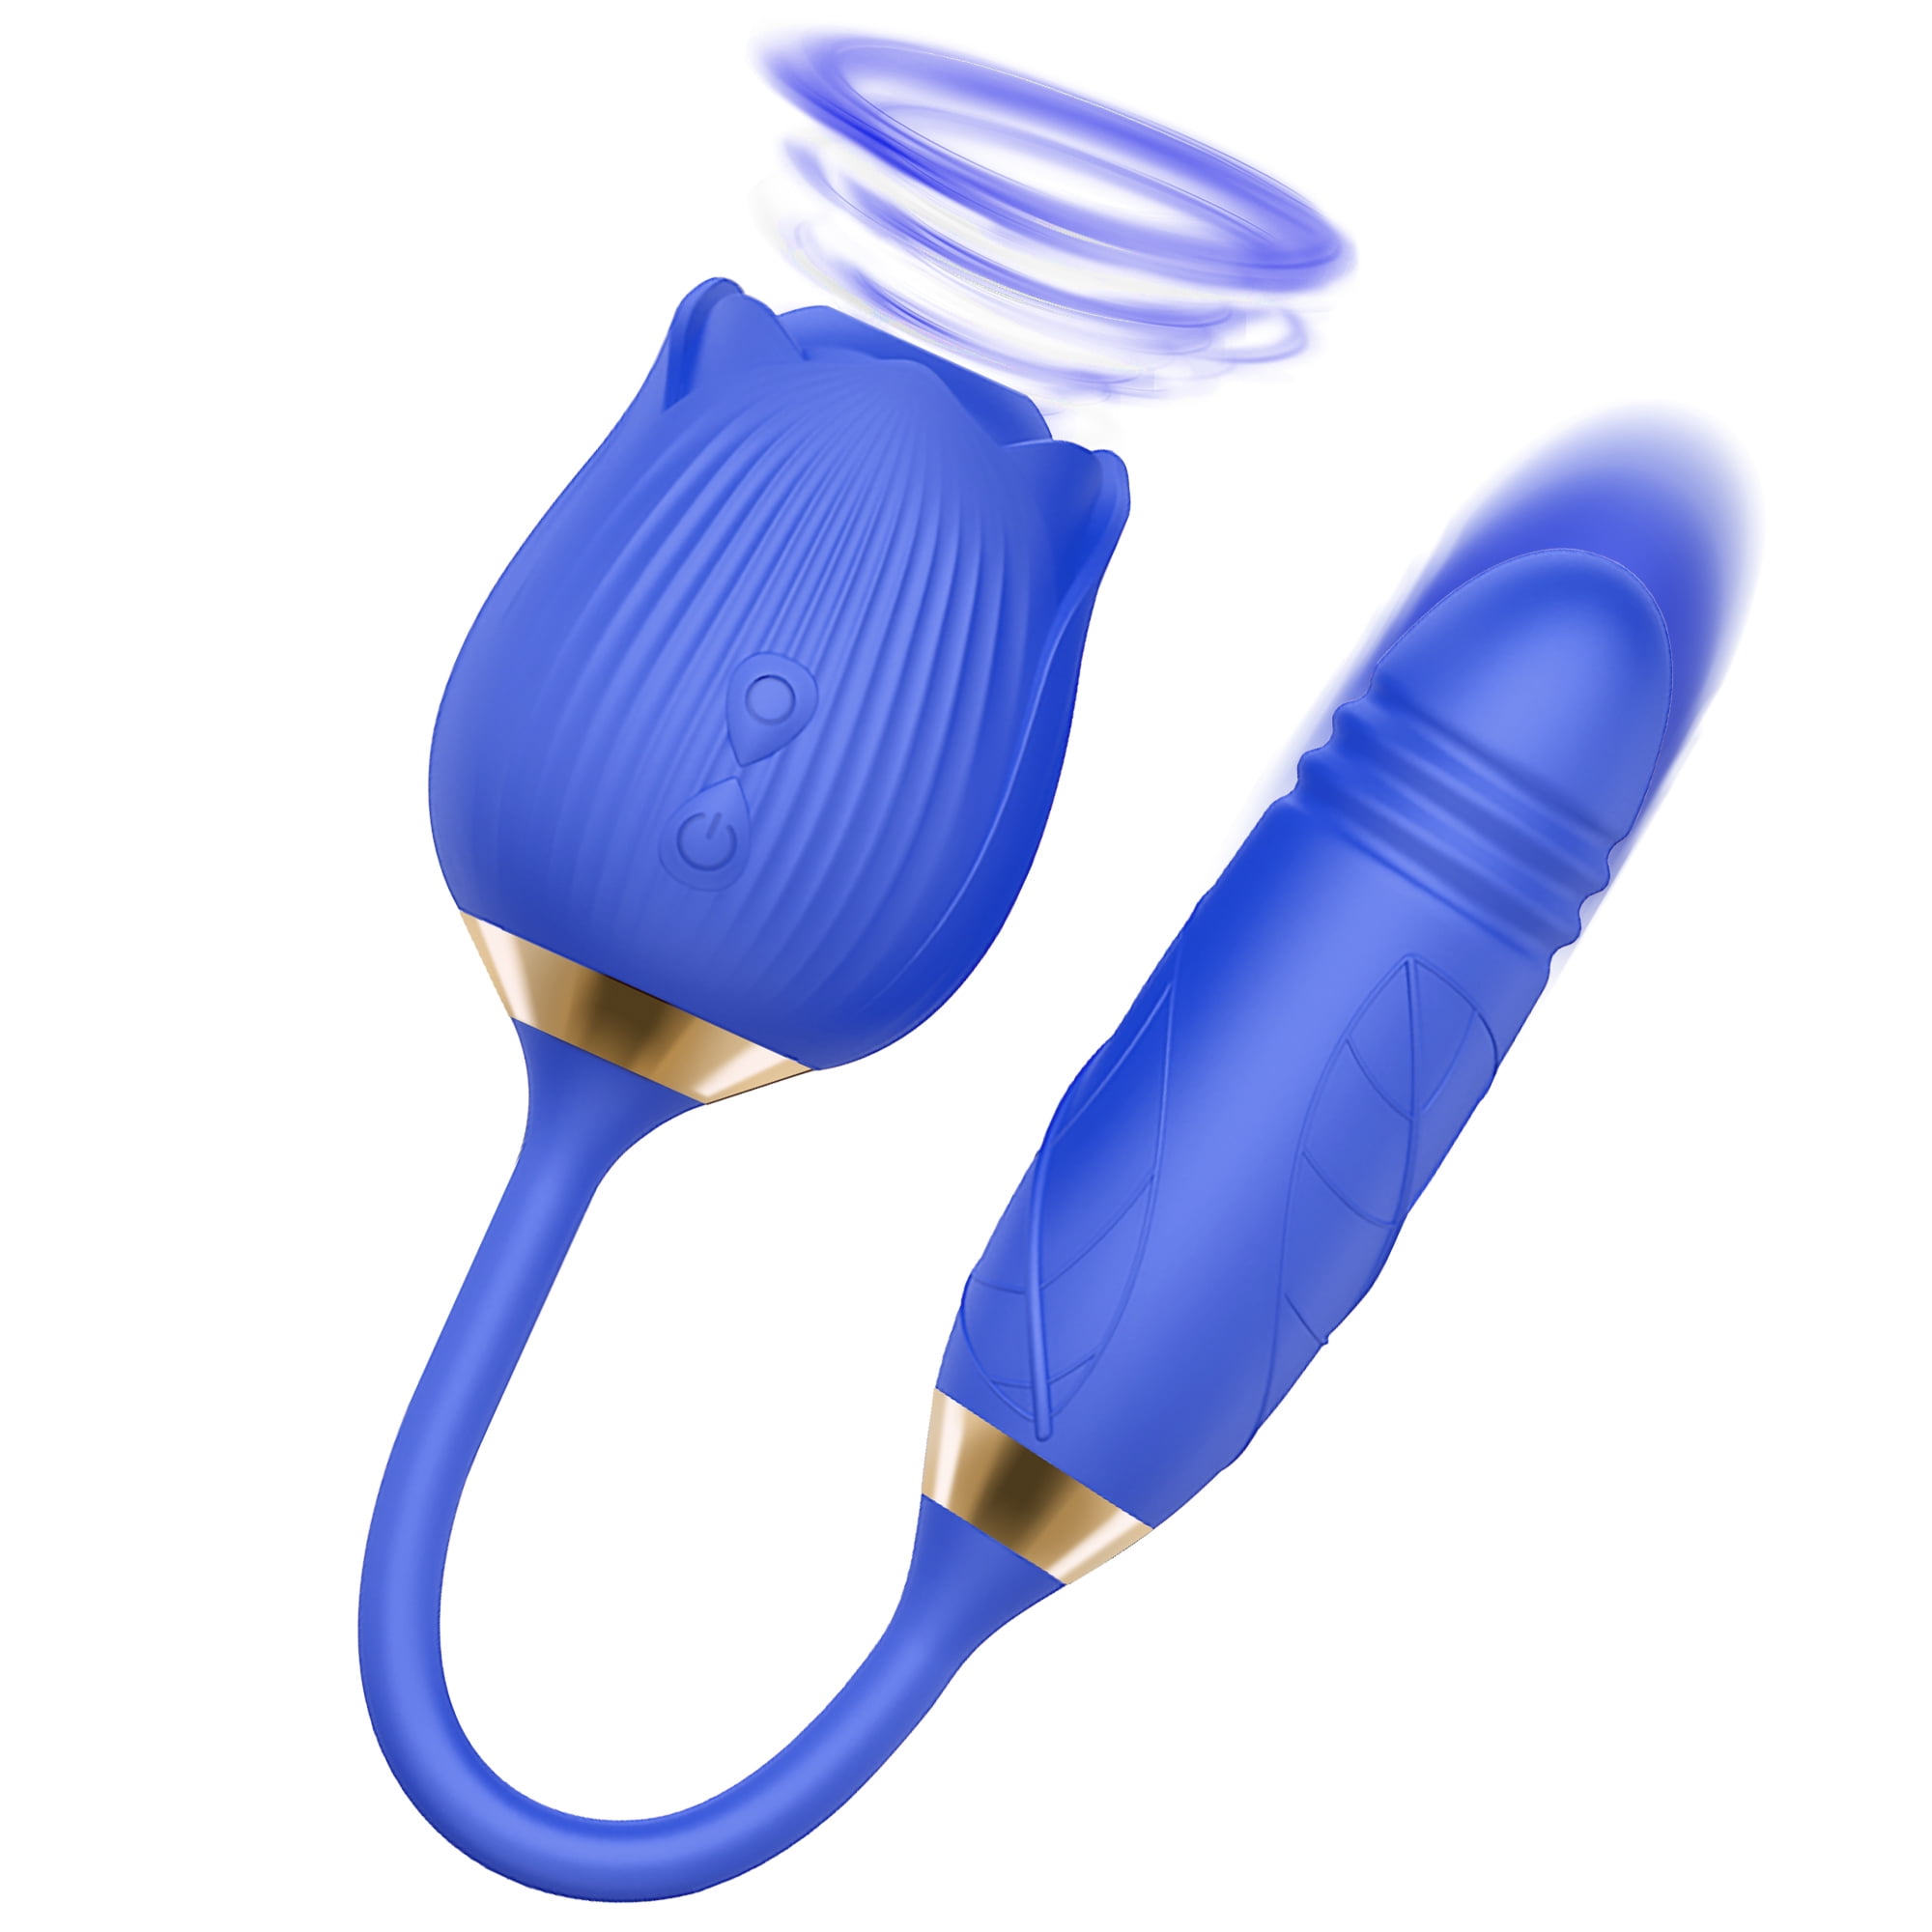 DARZU Vibrators and Adult Sex Toys for Women, Rose Toys Clitoral Stimulator with Dildo Vibrating Egg, Blue Purple